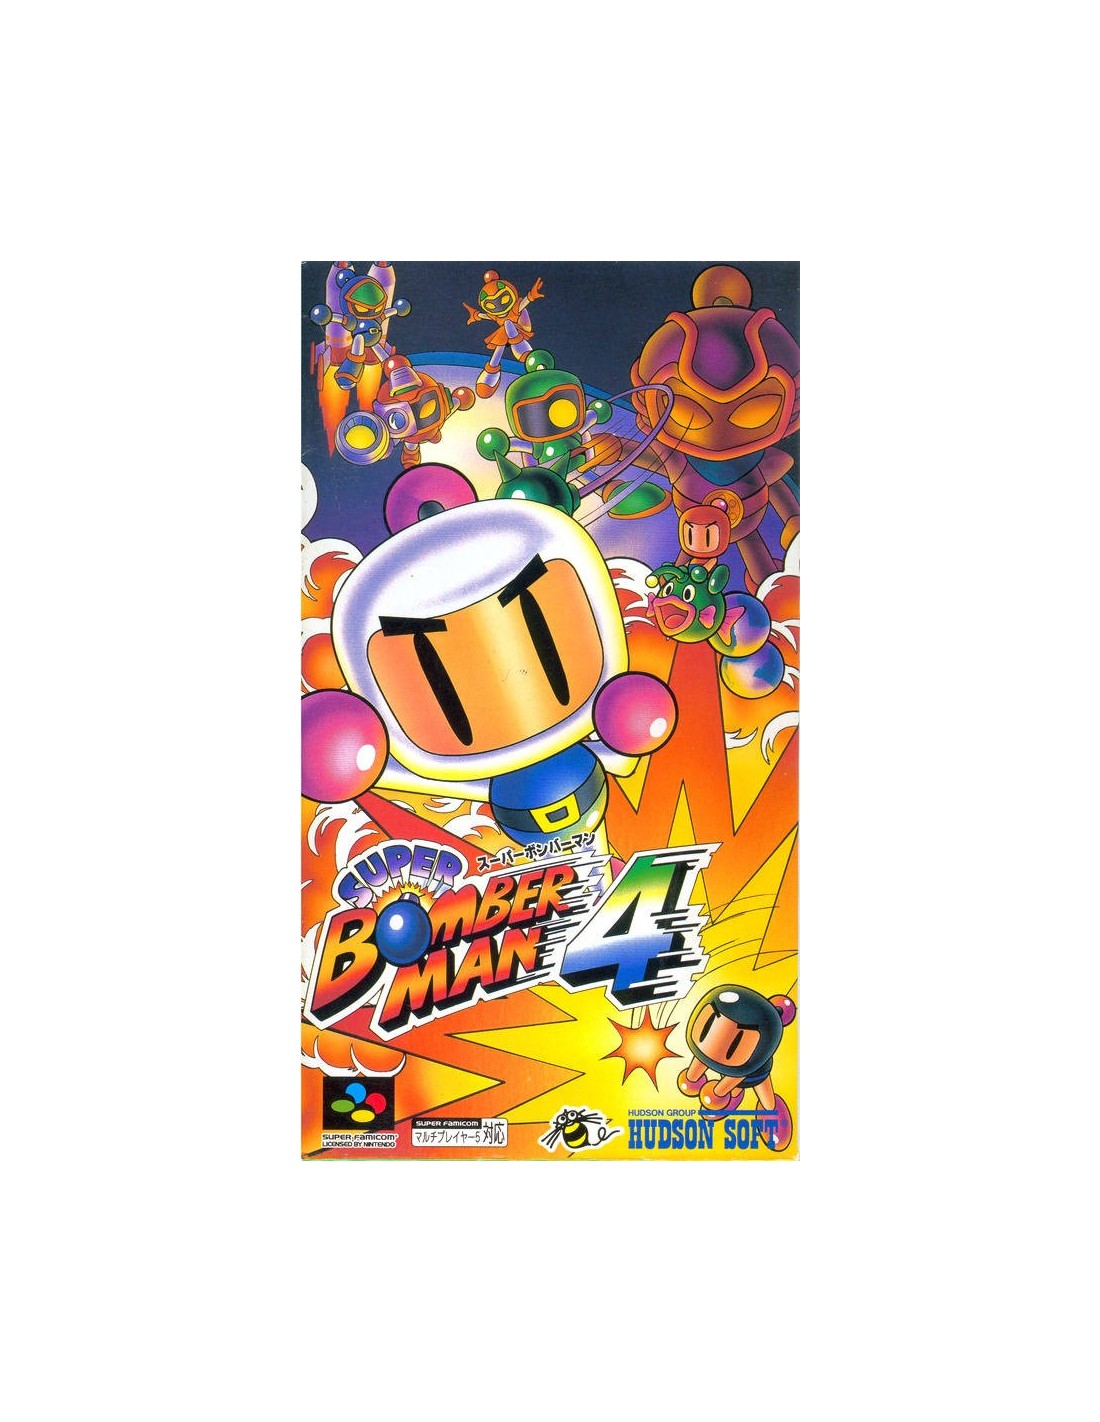 SUPER BOMBERMAN 4 Super Nintendo Superfamicom Video Game Japan Version